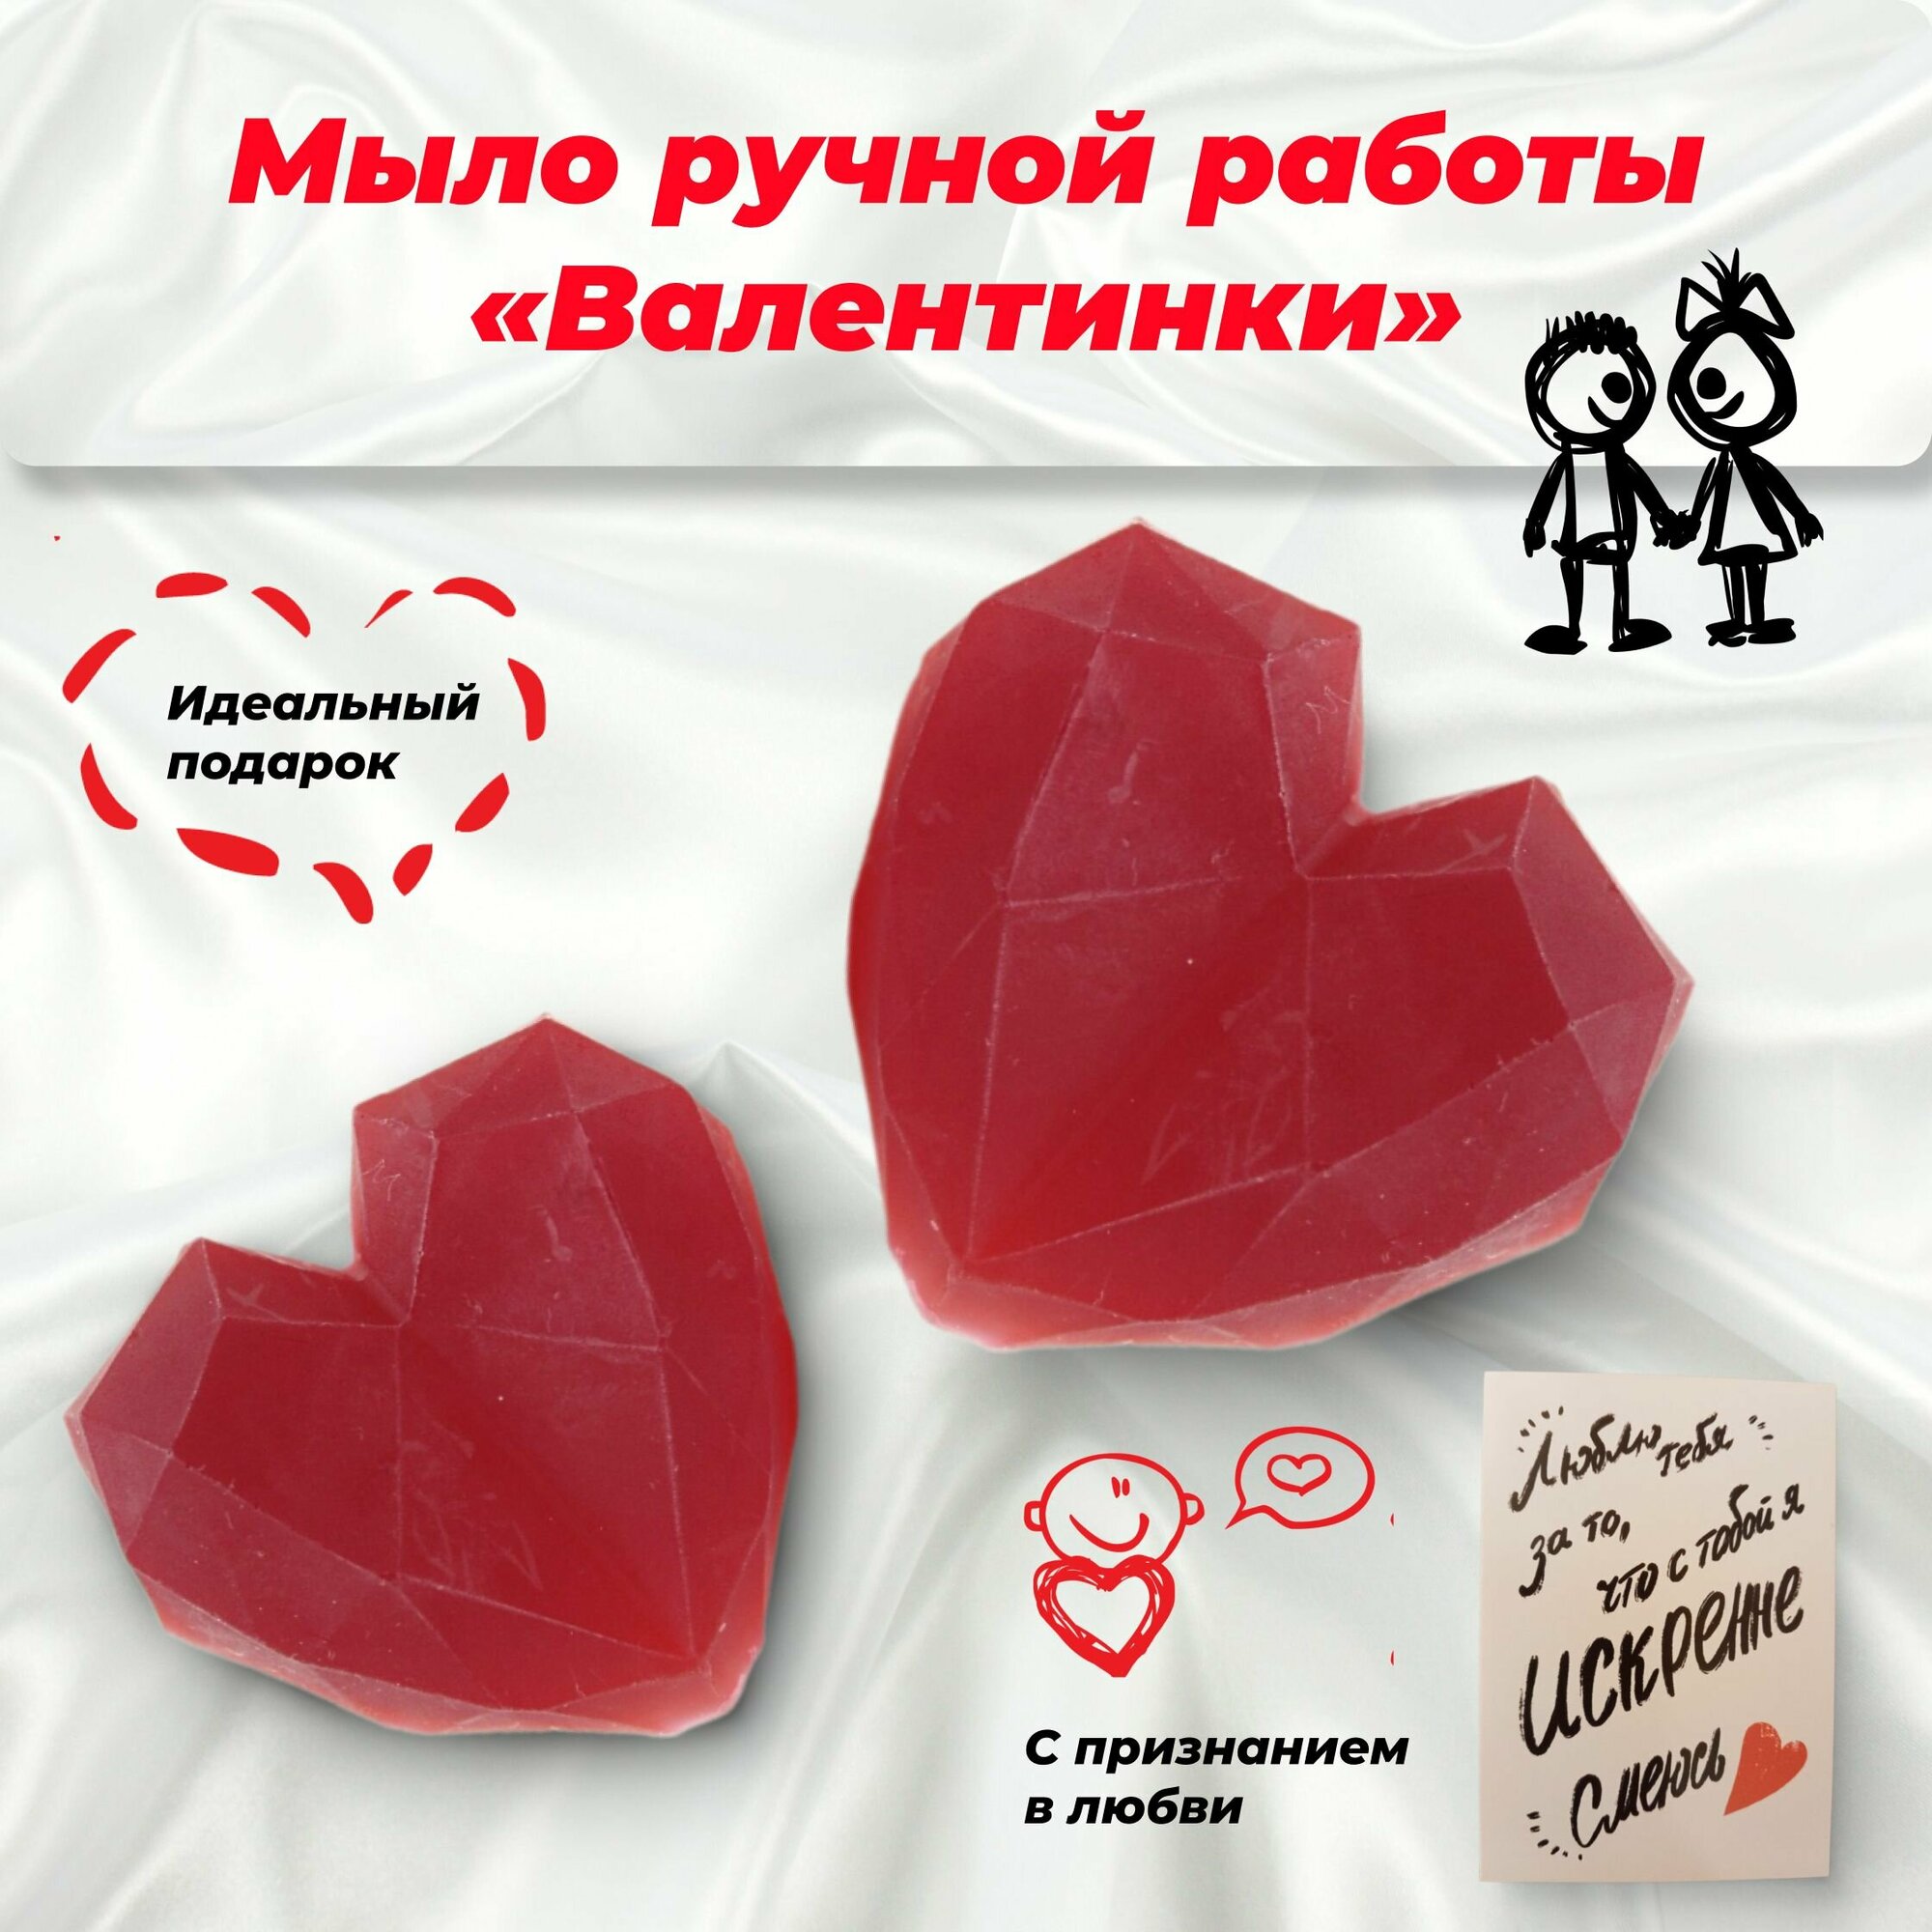 Набор мыла "Валентинки"/ подарок на 14 февраля